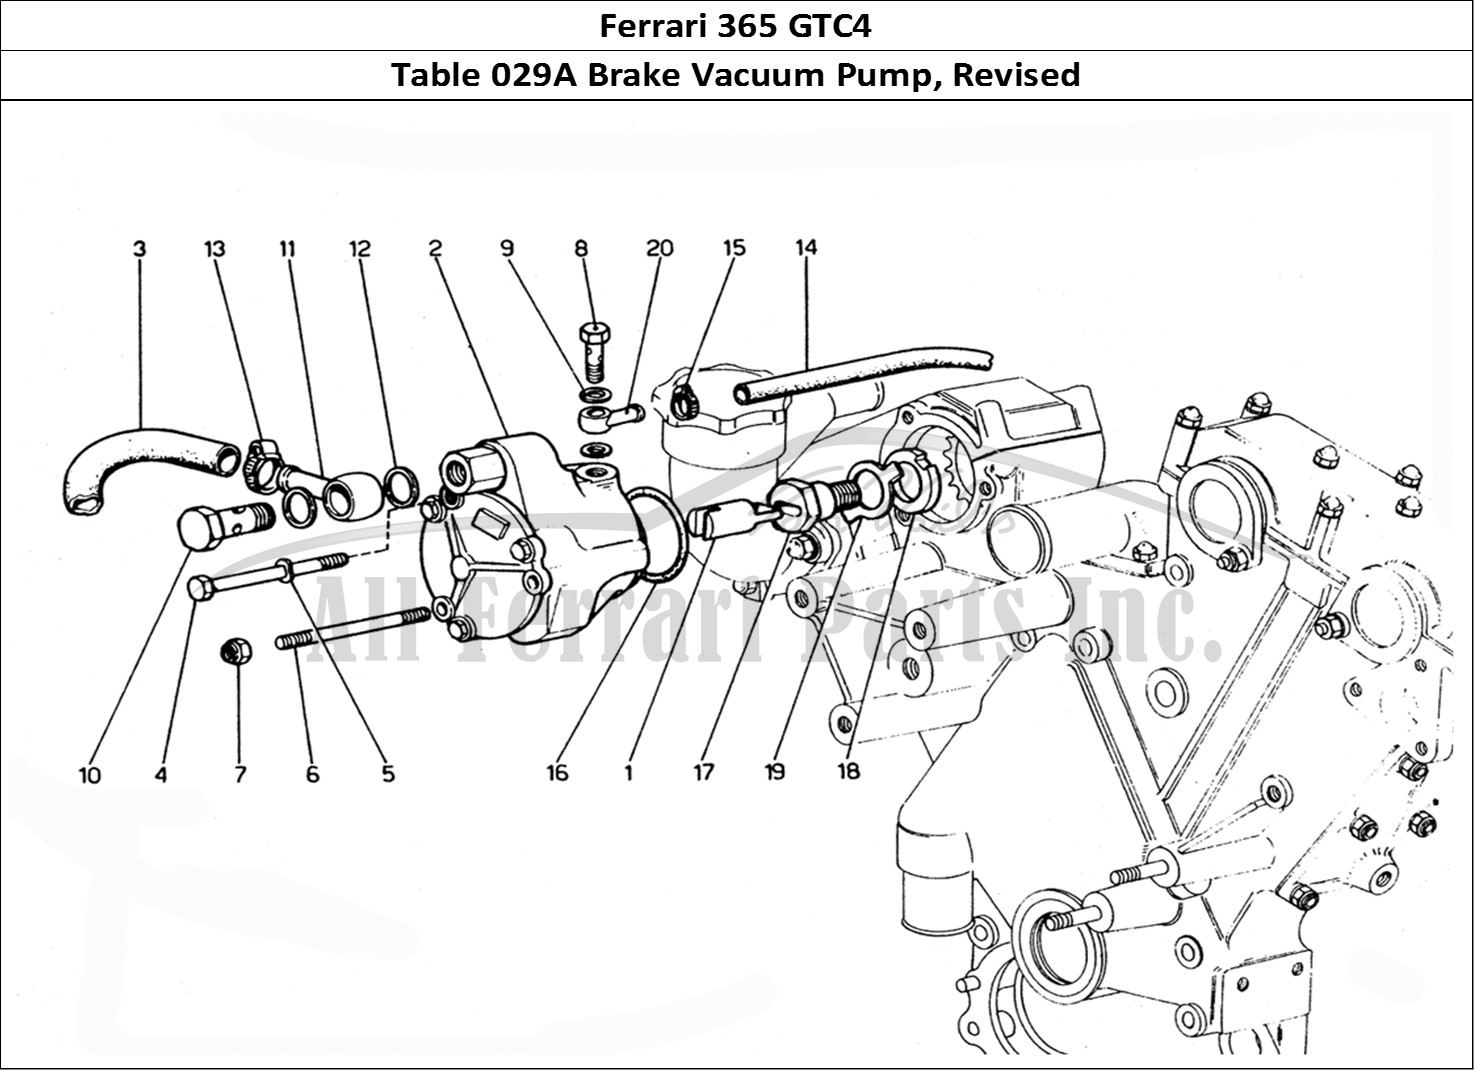 Ferrari Parts Ferrari 365 GTC4 (Mechanical) Page 029 Brake vacum pump - Revisi